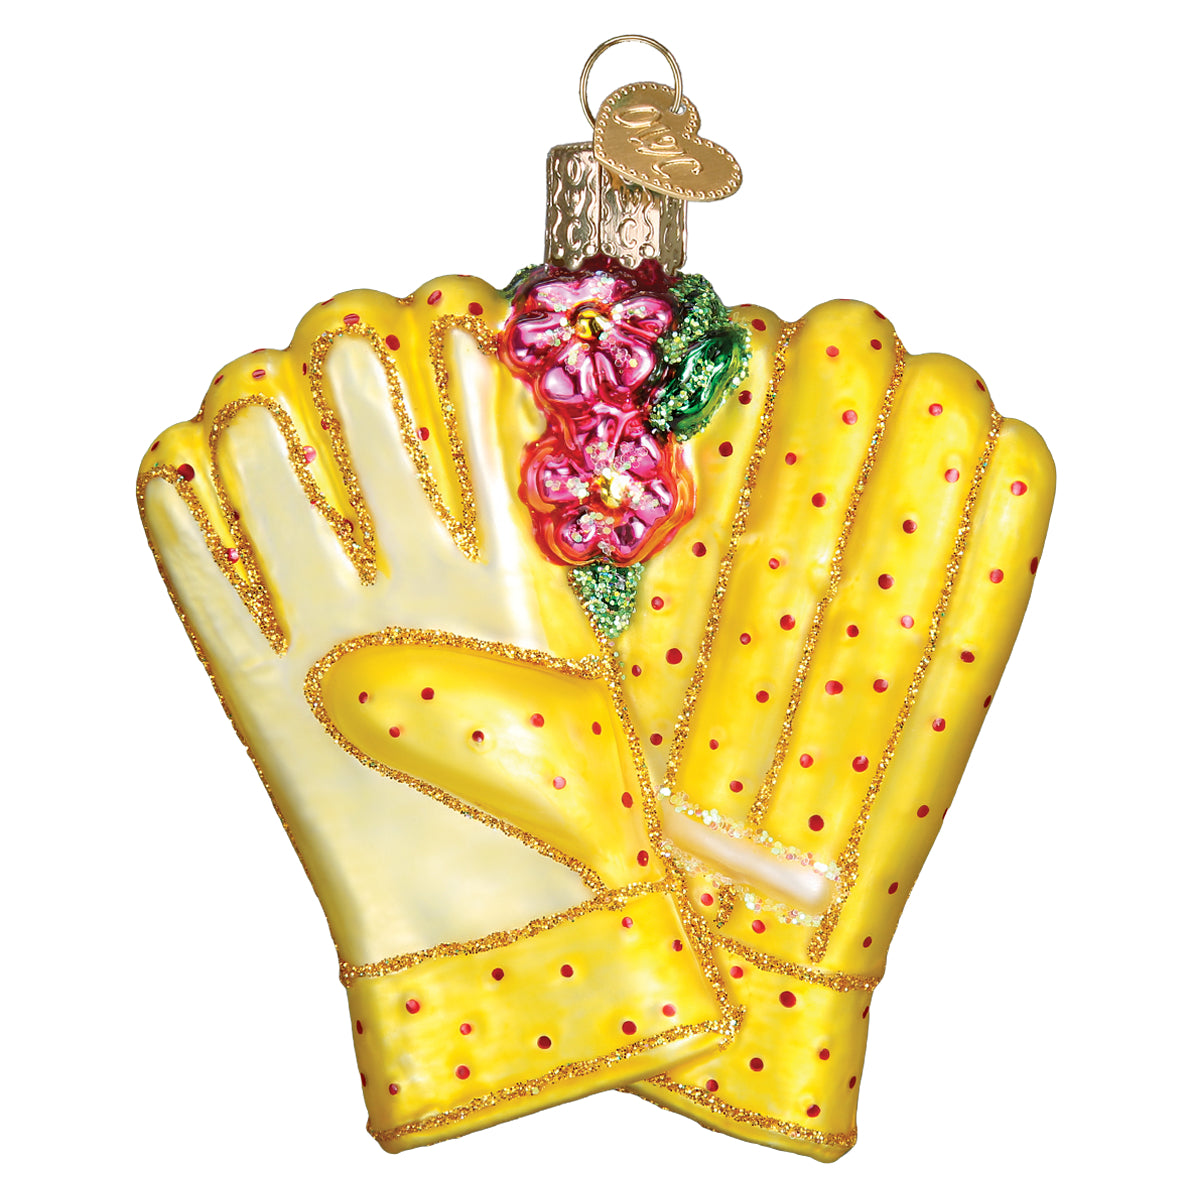 Gardening Gloves Ornament